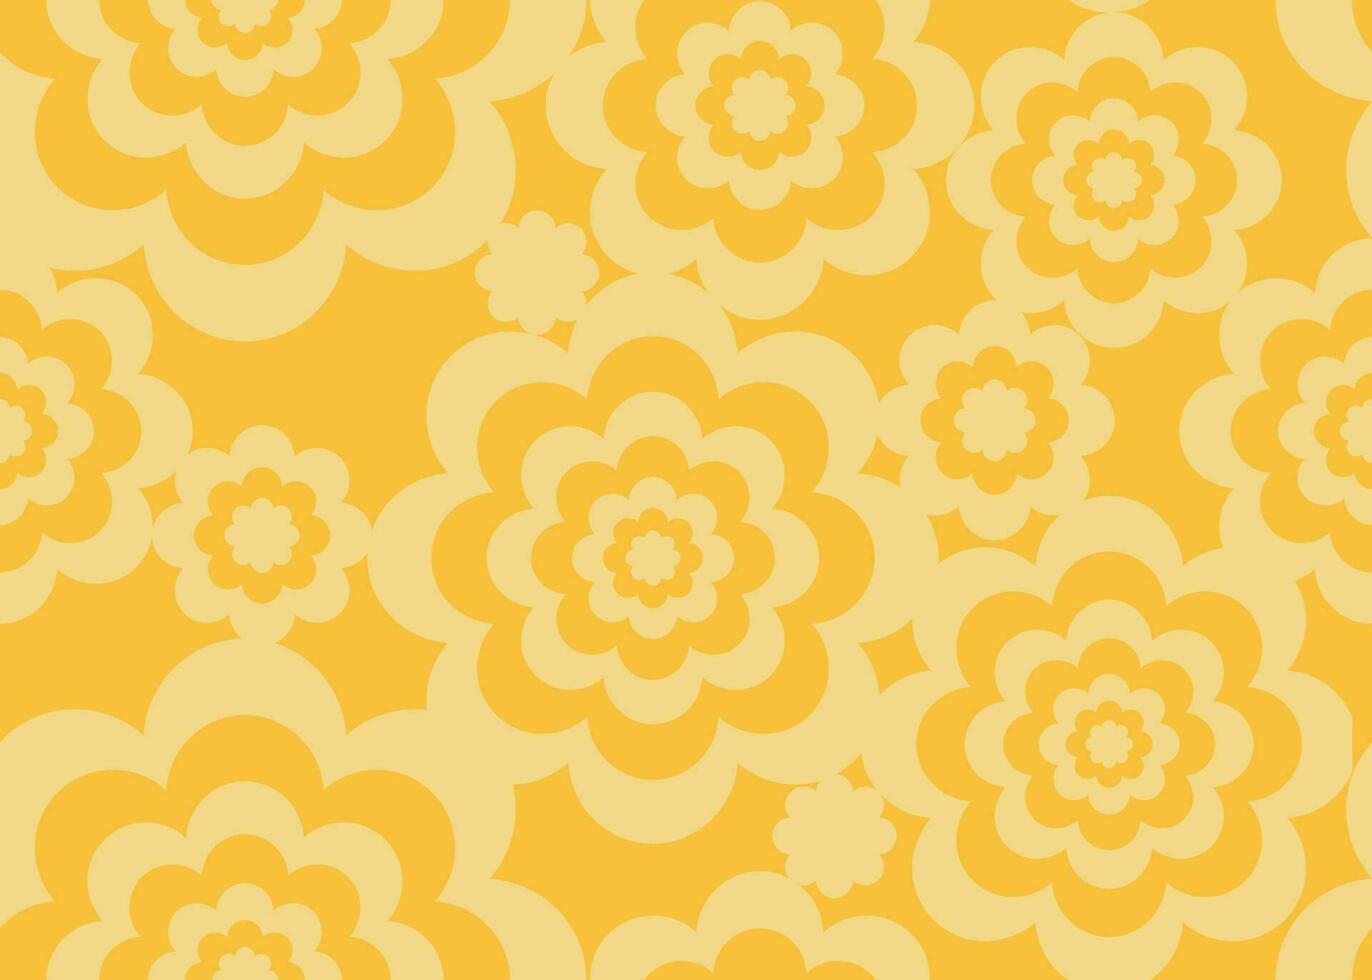 Yellow Floral Background, Modern Illustration in Flat Design, Landscape Image. Vivid Mustard Blooming Flowers Print Design. vector